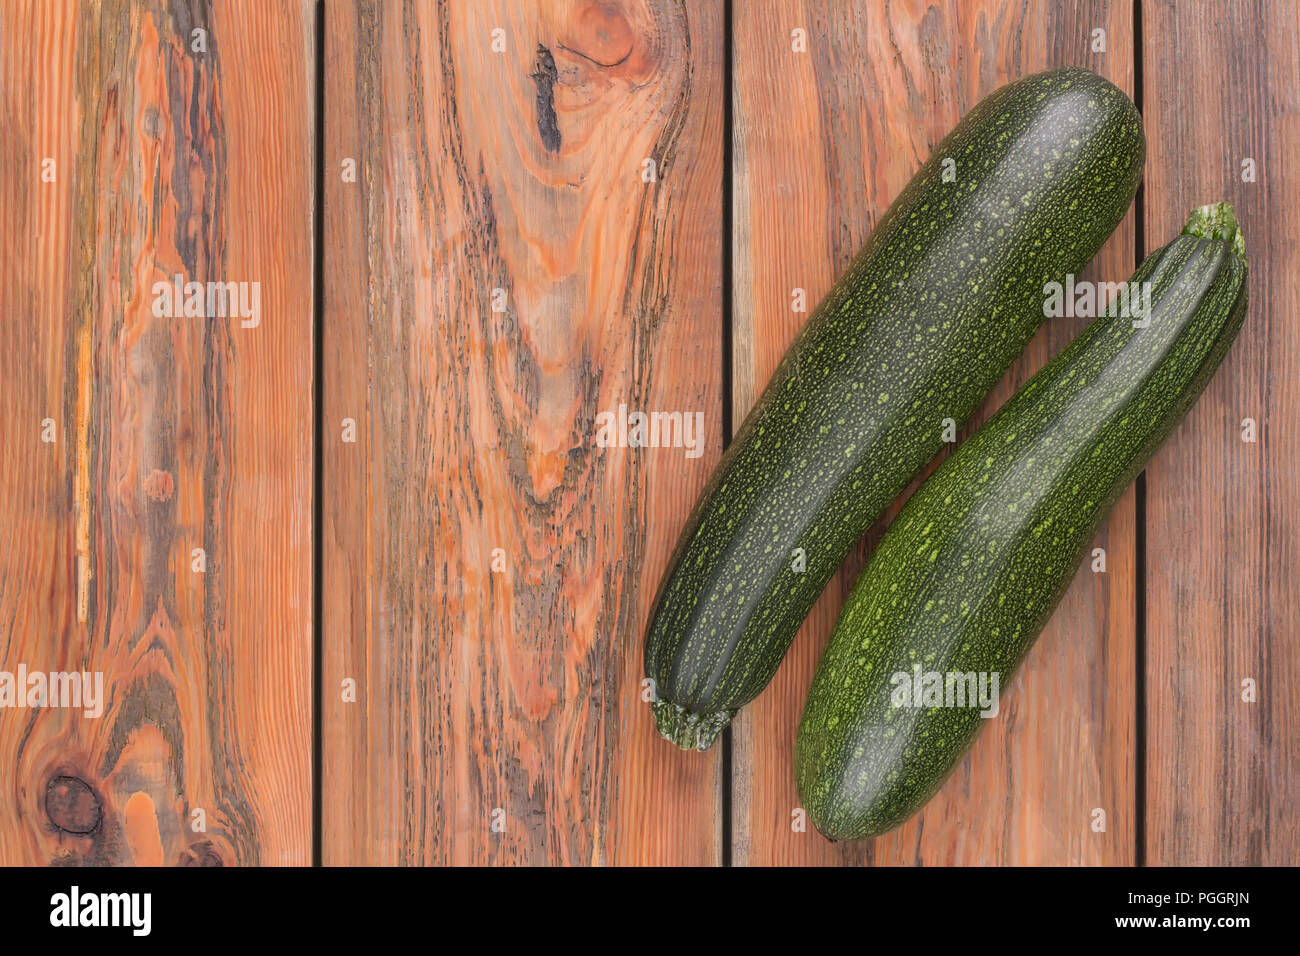 Squash, zucchini black beauty organic. Top view. Brown wooden desk background. Stock Photo